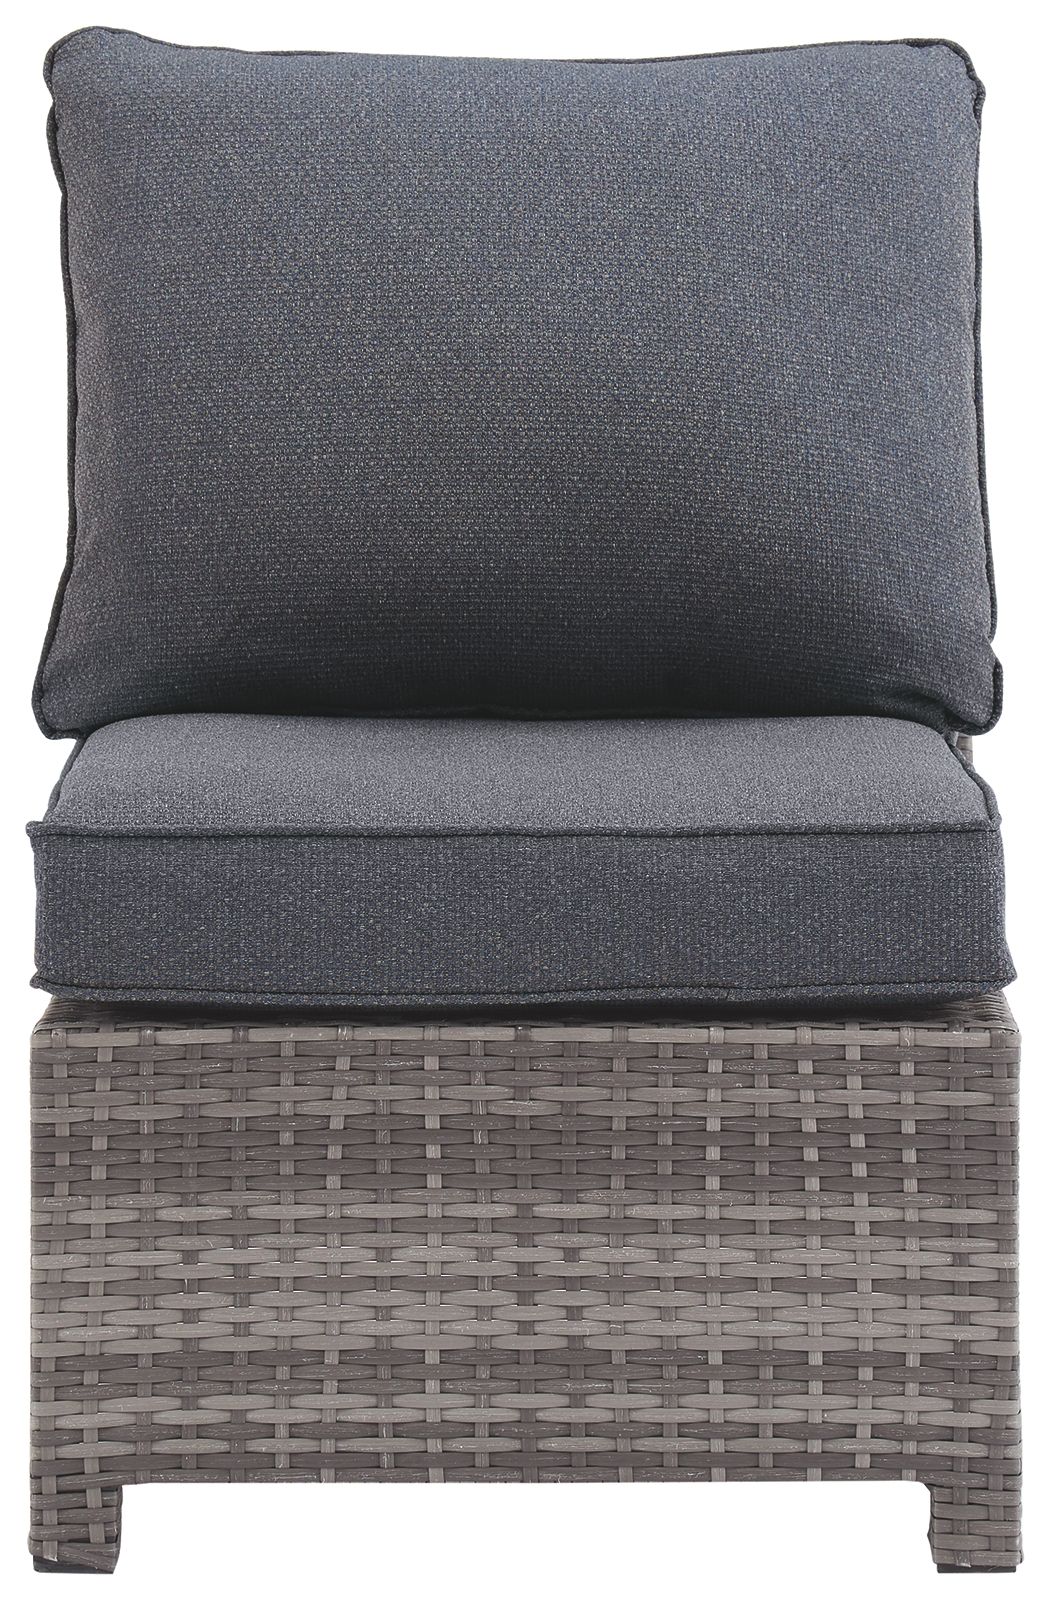 Salem - Gray - Armless Chair W/Cushion - Tony's Home Furnishings